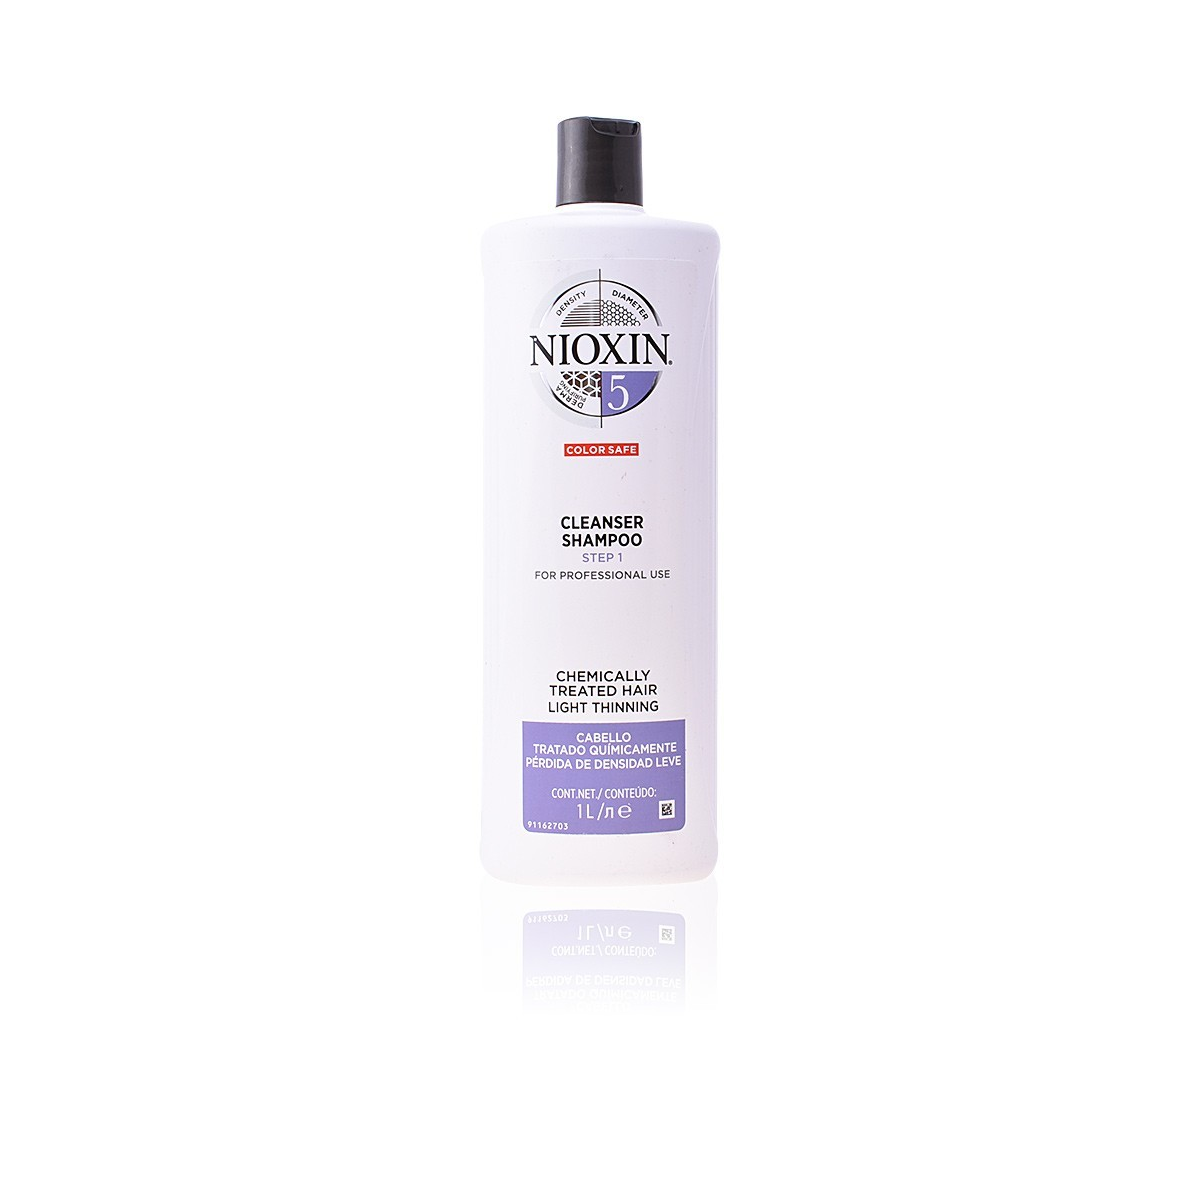 NIOXIN - SISTEMA 5 CLEANSER SHAMPOO (1000ml) Shampoo per capelli trattati chimicamente